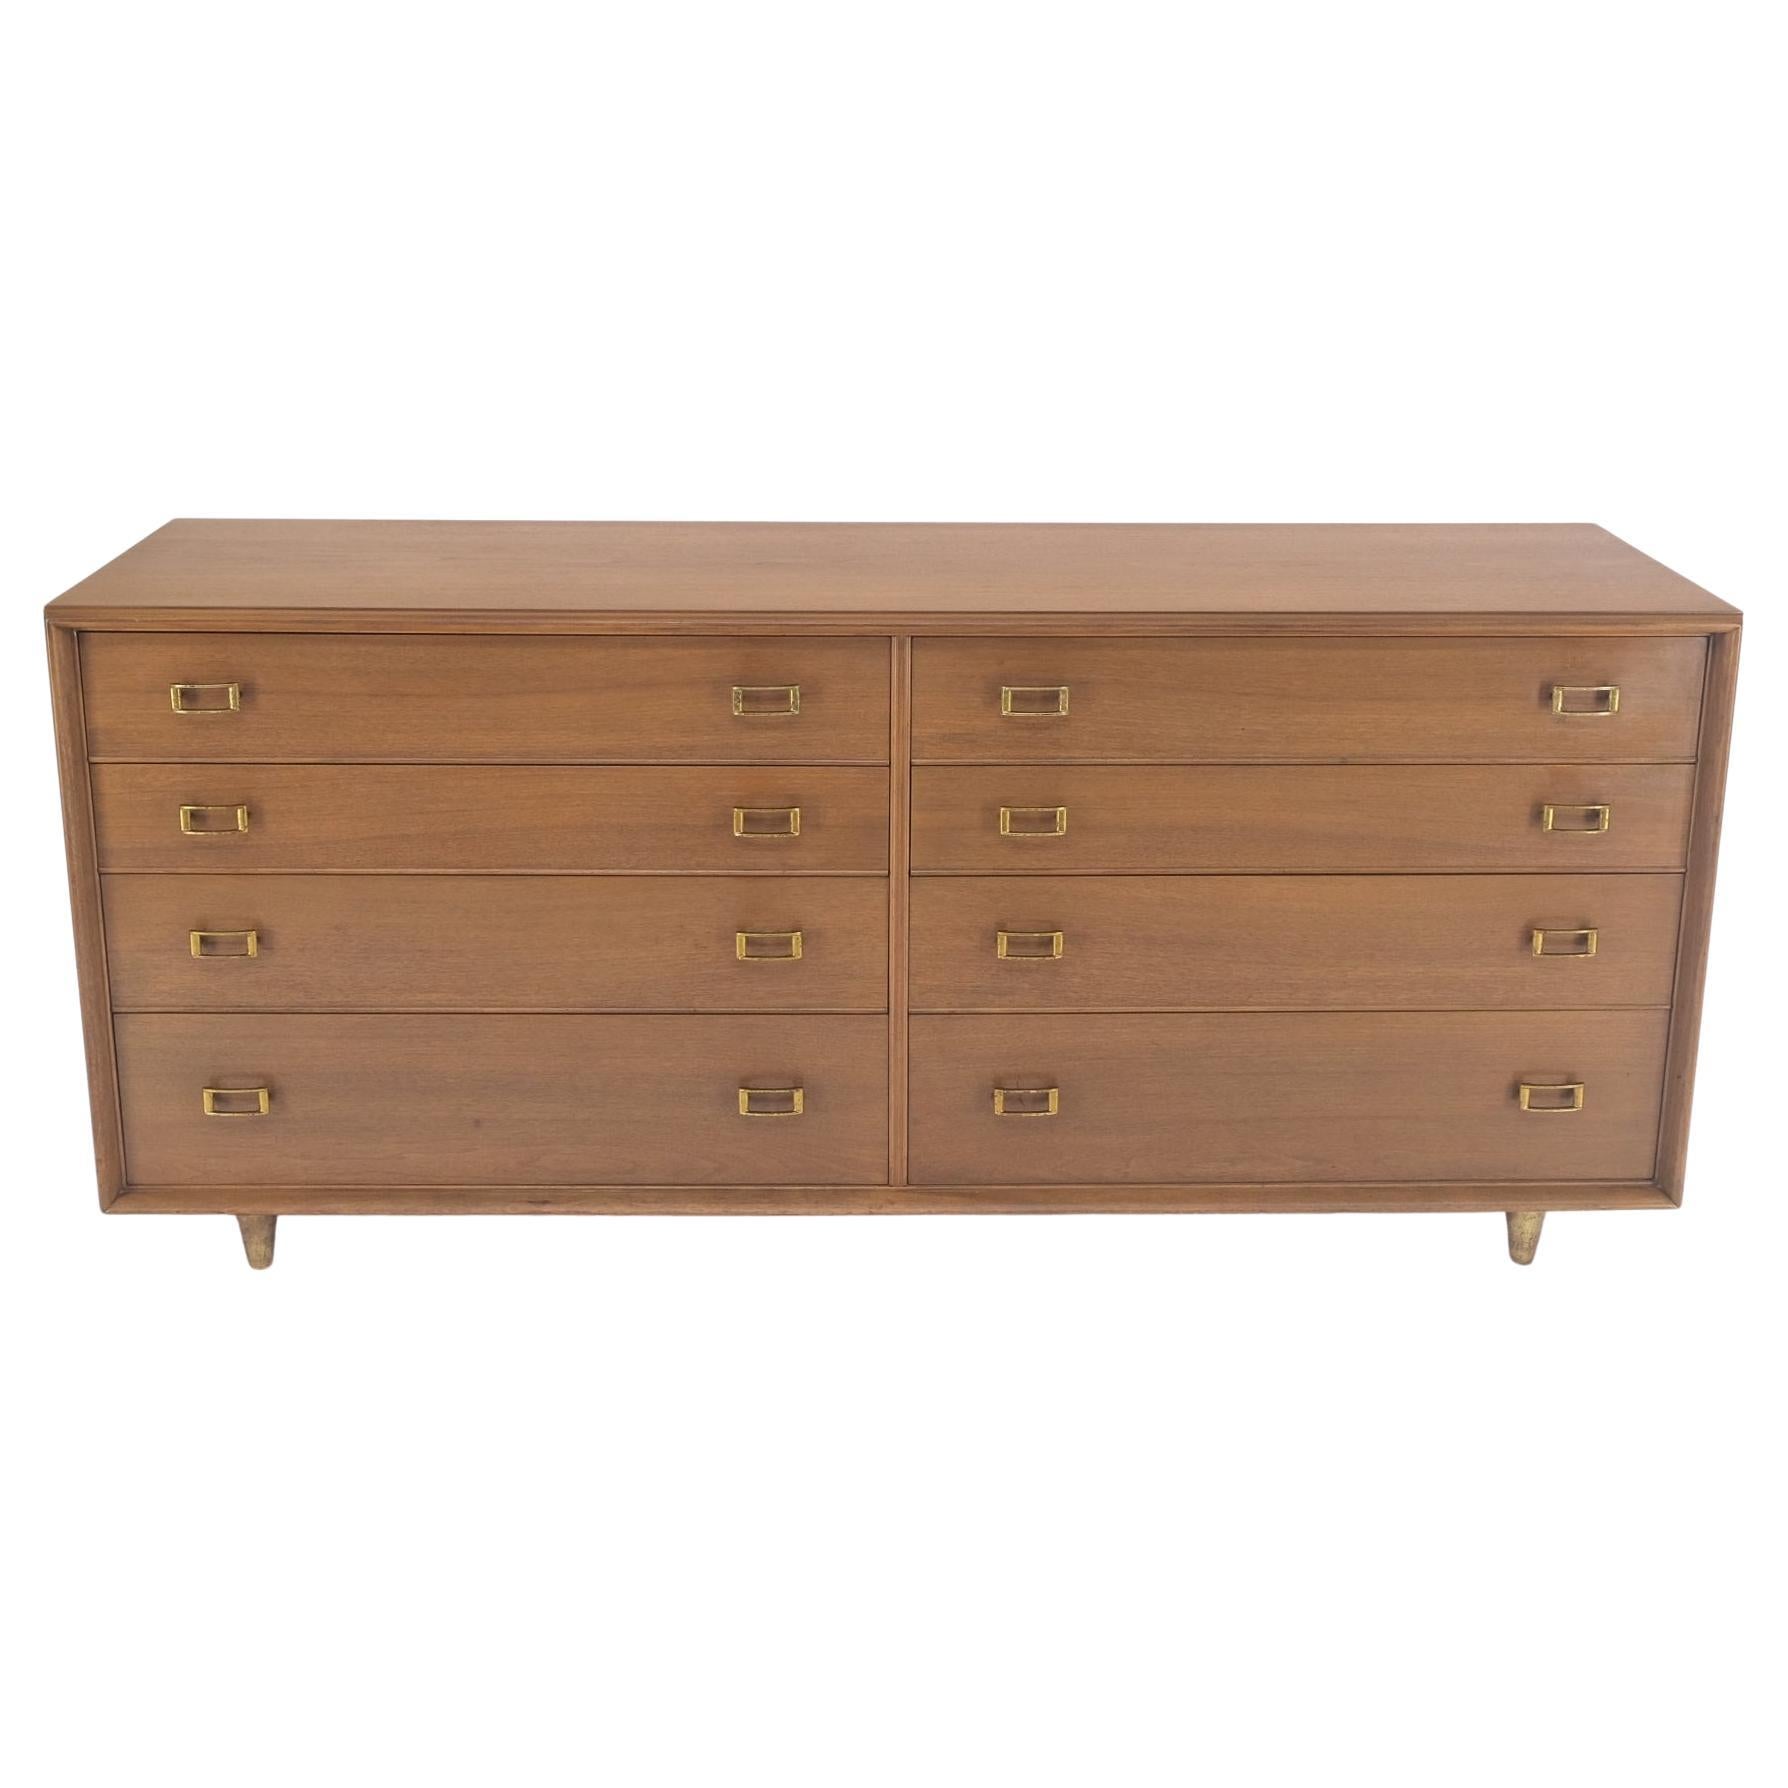 Paul Frankl Johnson Furniture Long 8 Drawers Dresser Credenza Buckle Brass Pulls 5